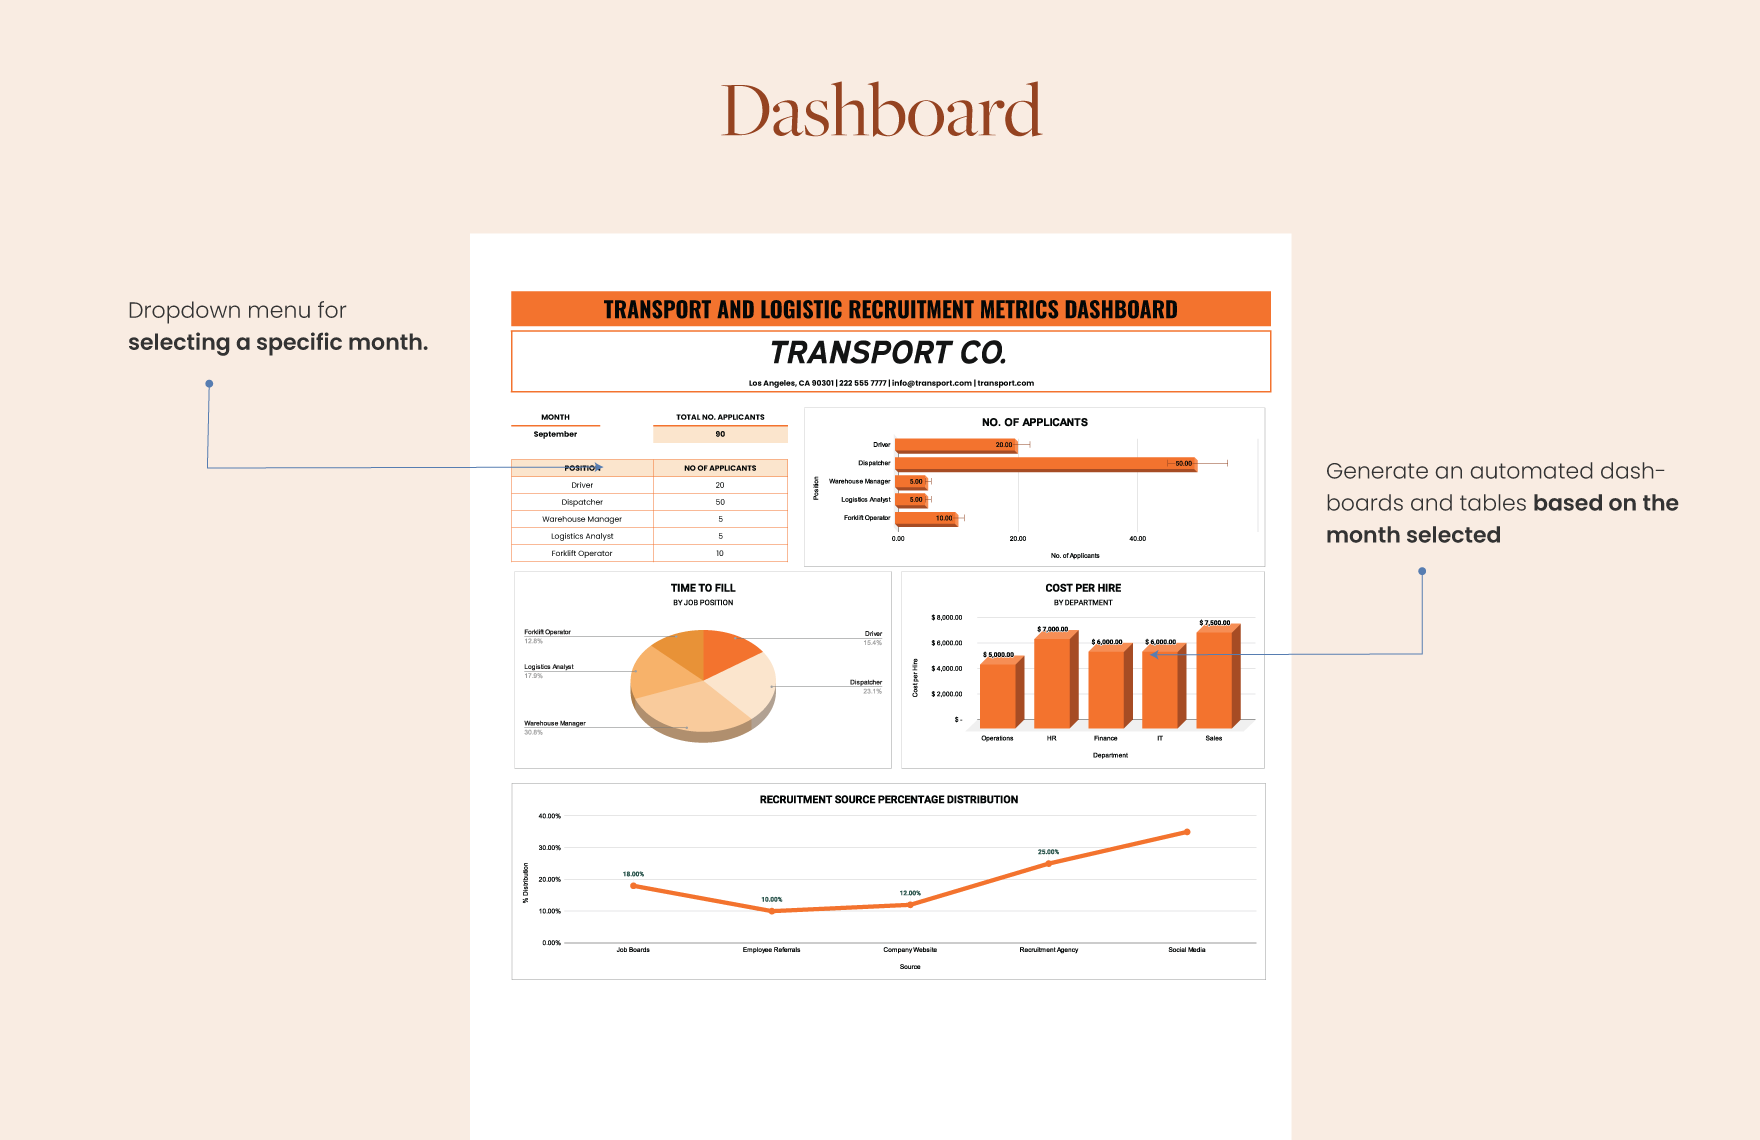 Transport and Logistics Recruitment Metrics Dashboard Template